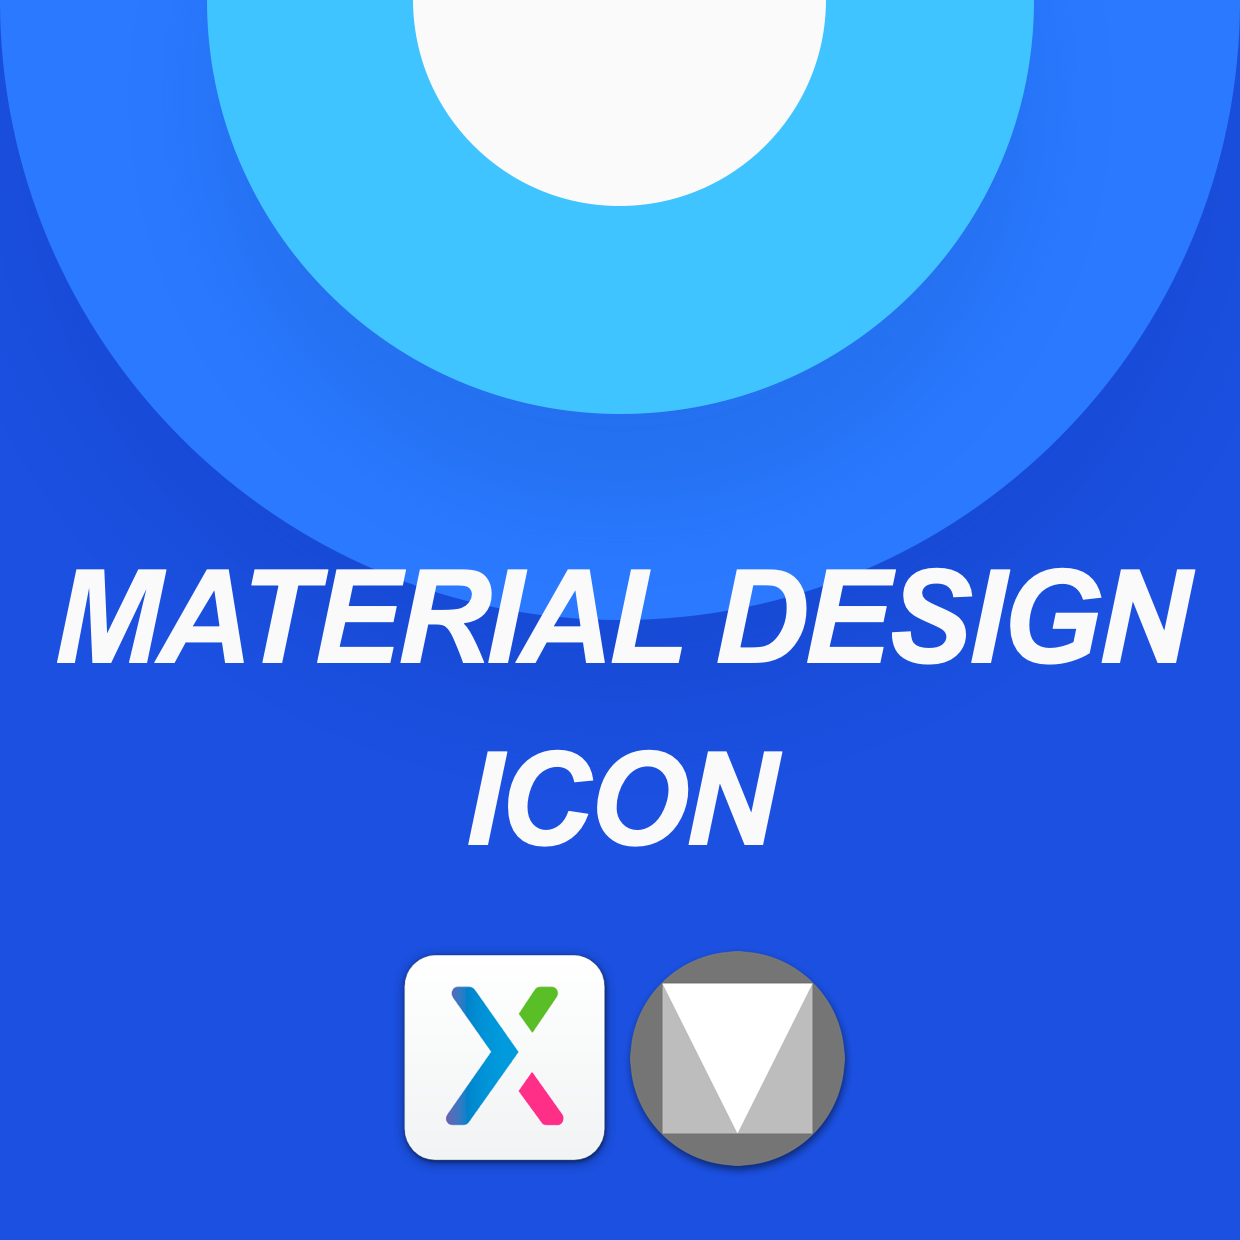 Material Design 4 Icons